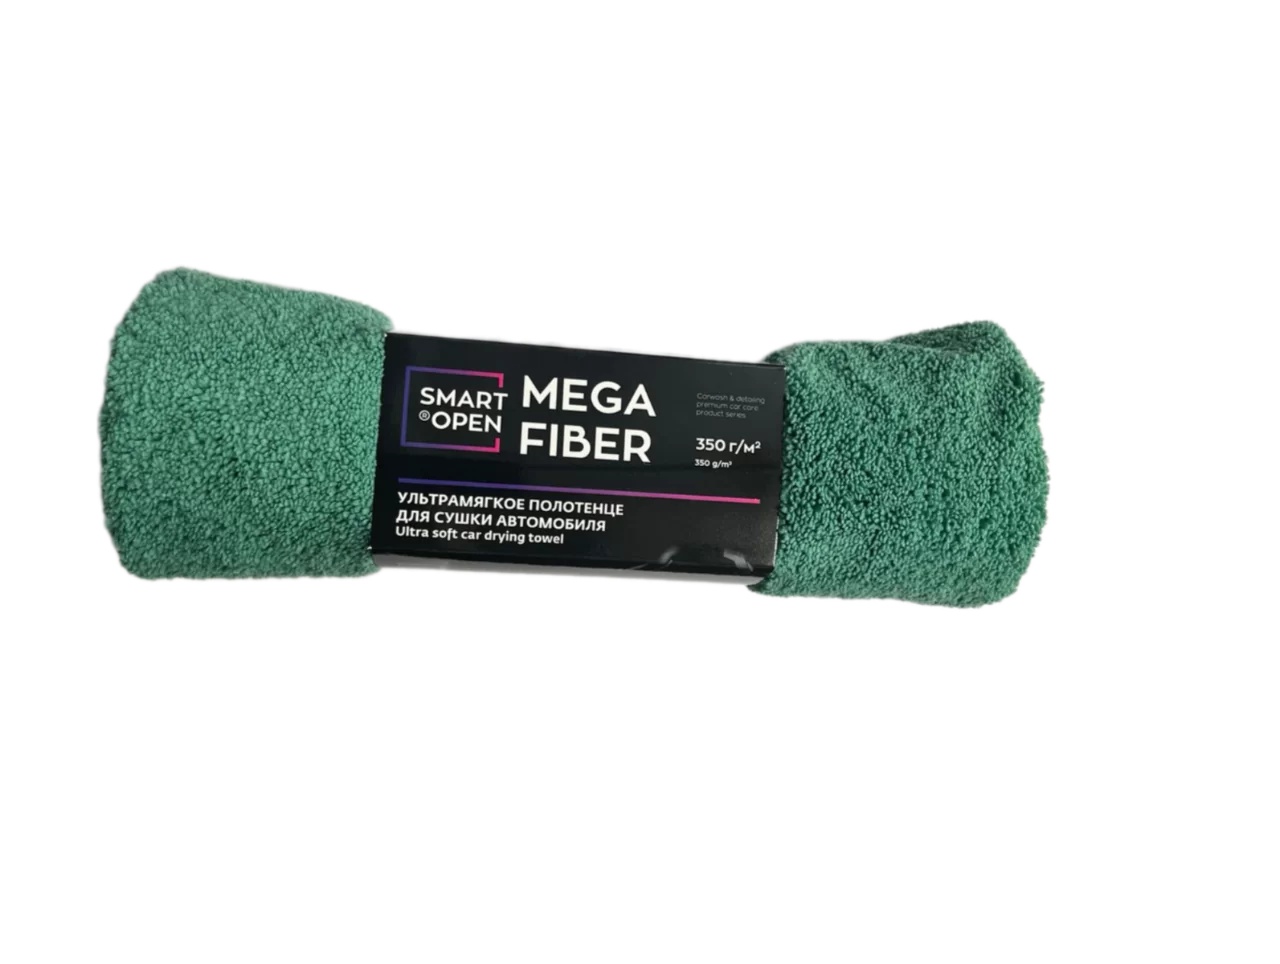 Ультра мягкое полотенце для сушки автомобиля Mega Fiber